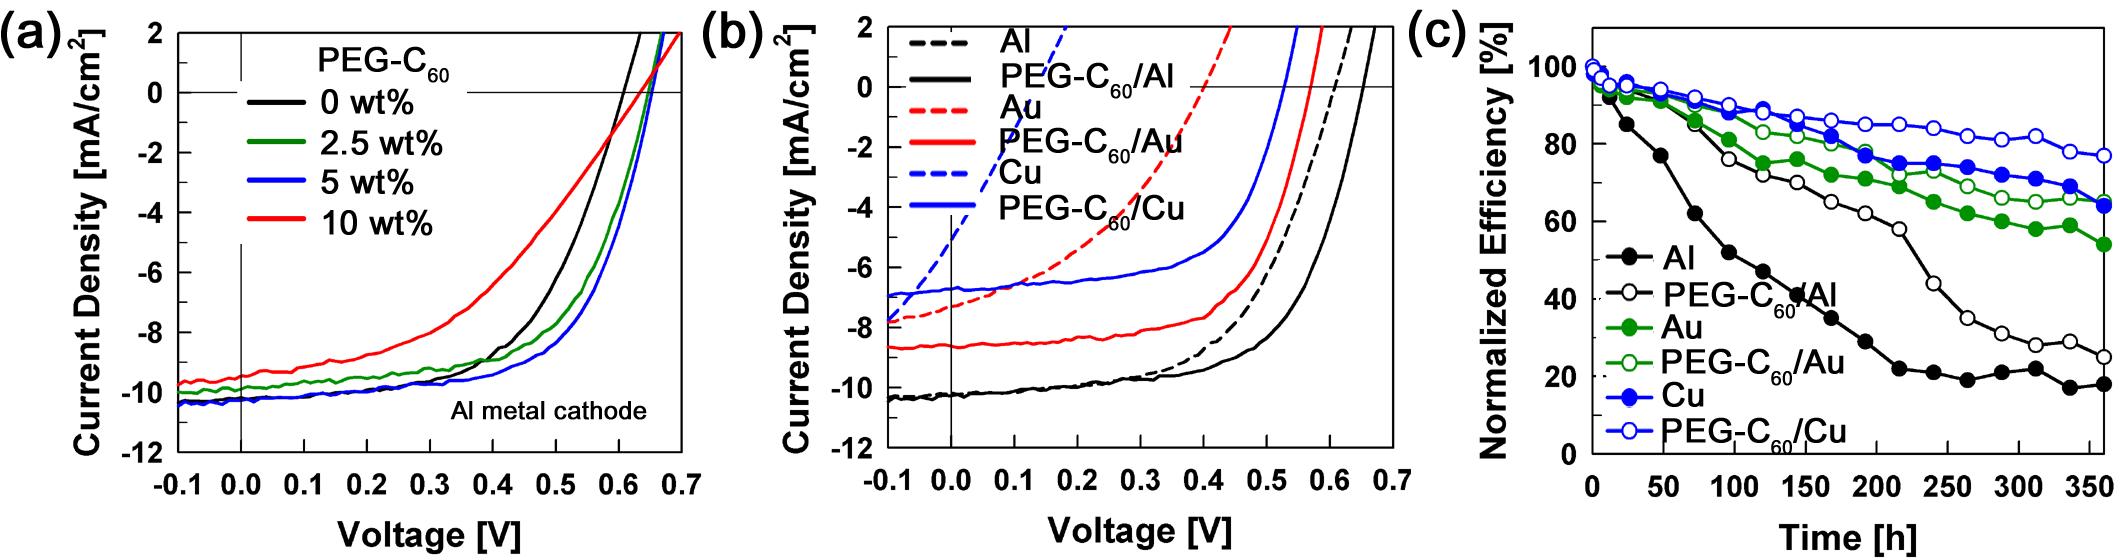 (a) PEG-C60의 첨가량에 따른 유기태양전지의 효율. (b) 다양한 전극 물질을 사용한 유기태양전지의 효율과 (c) 대기 중에 보관된 소자의 시간에 따른 효율 감소.